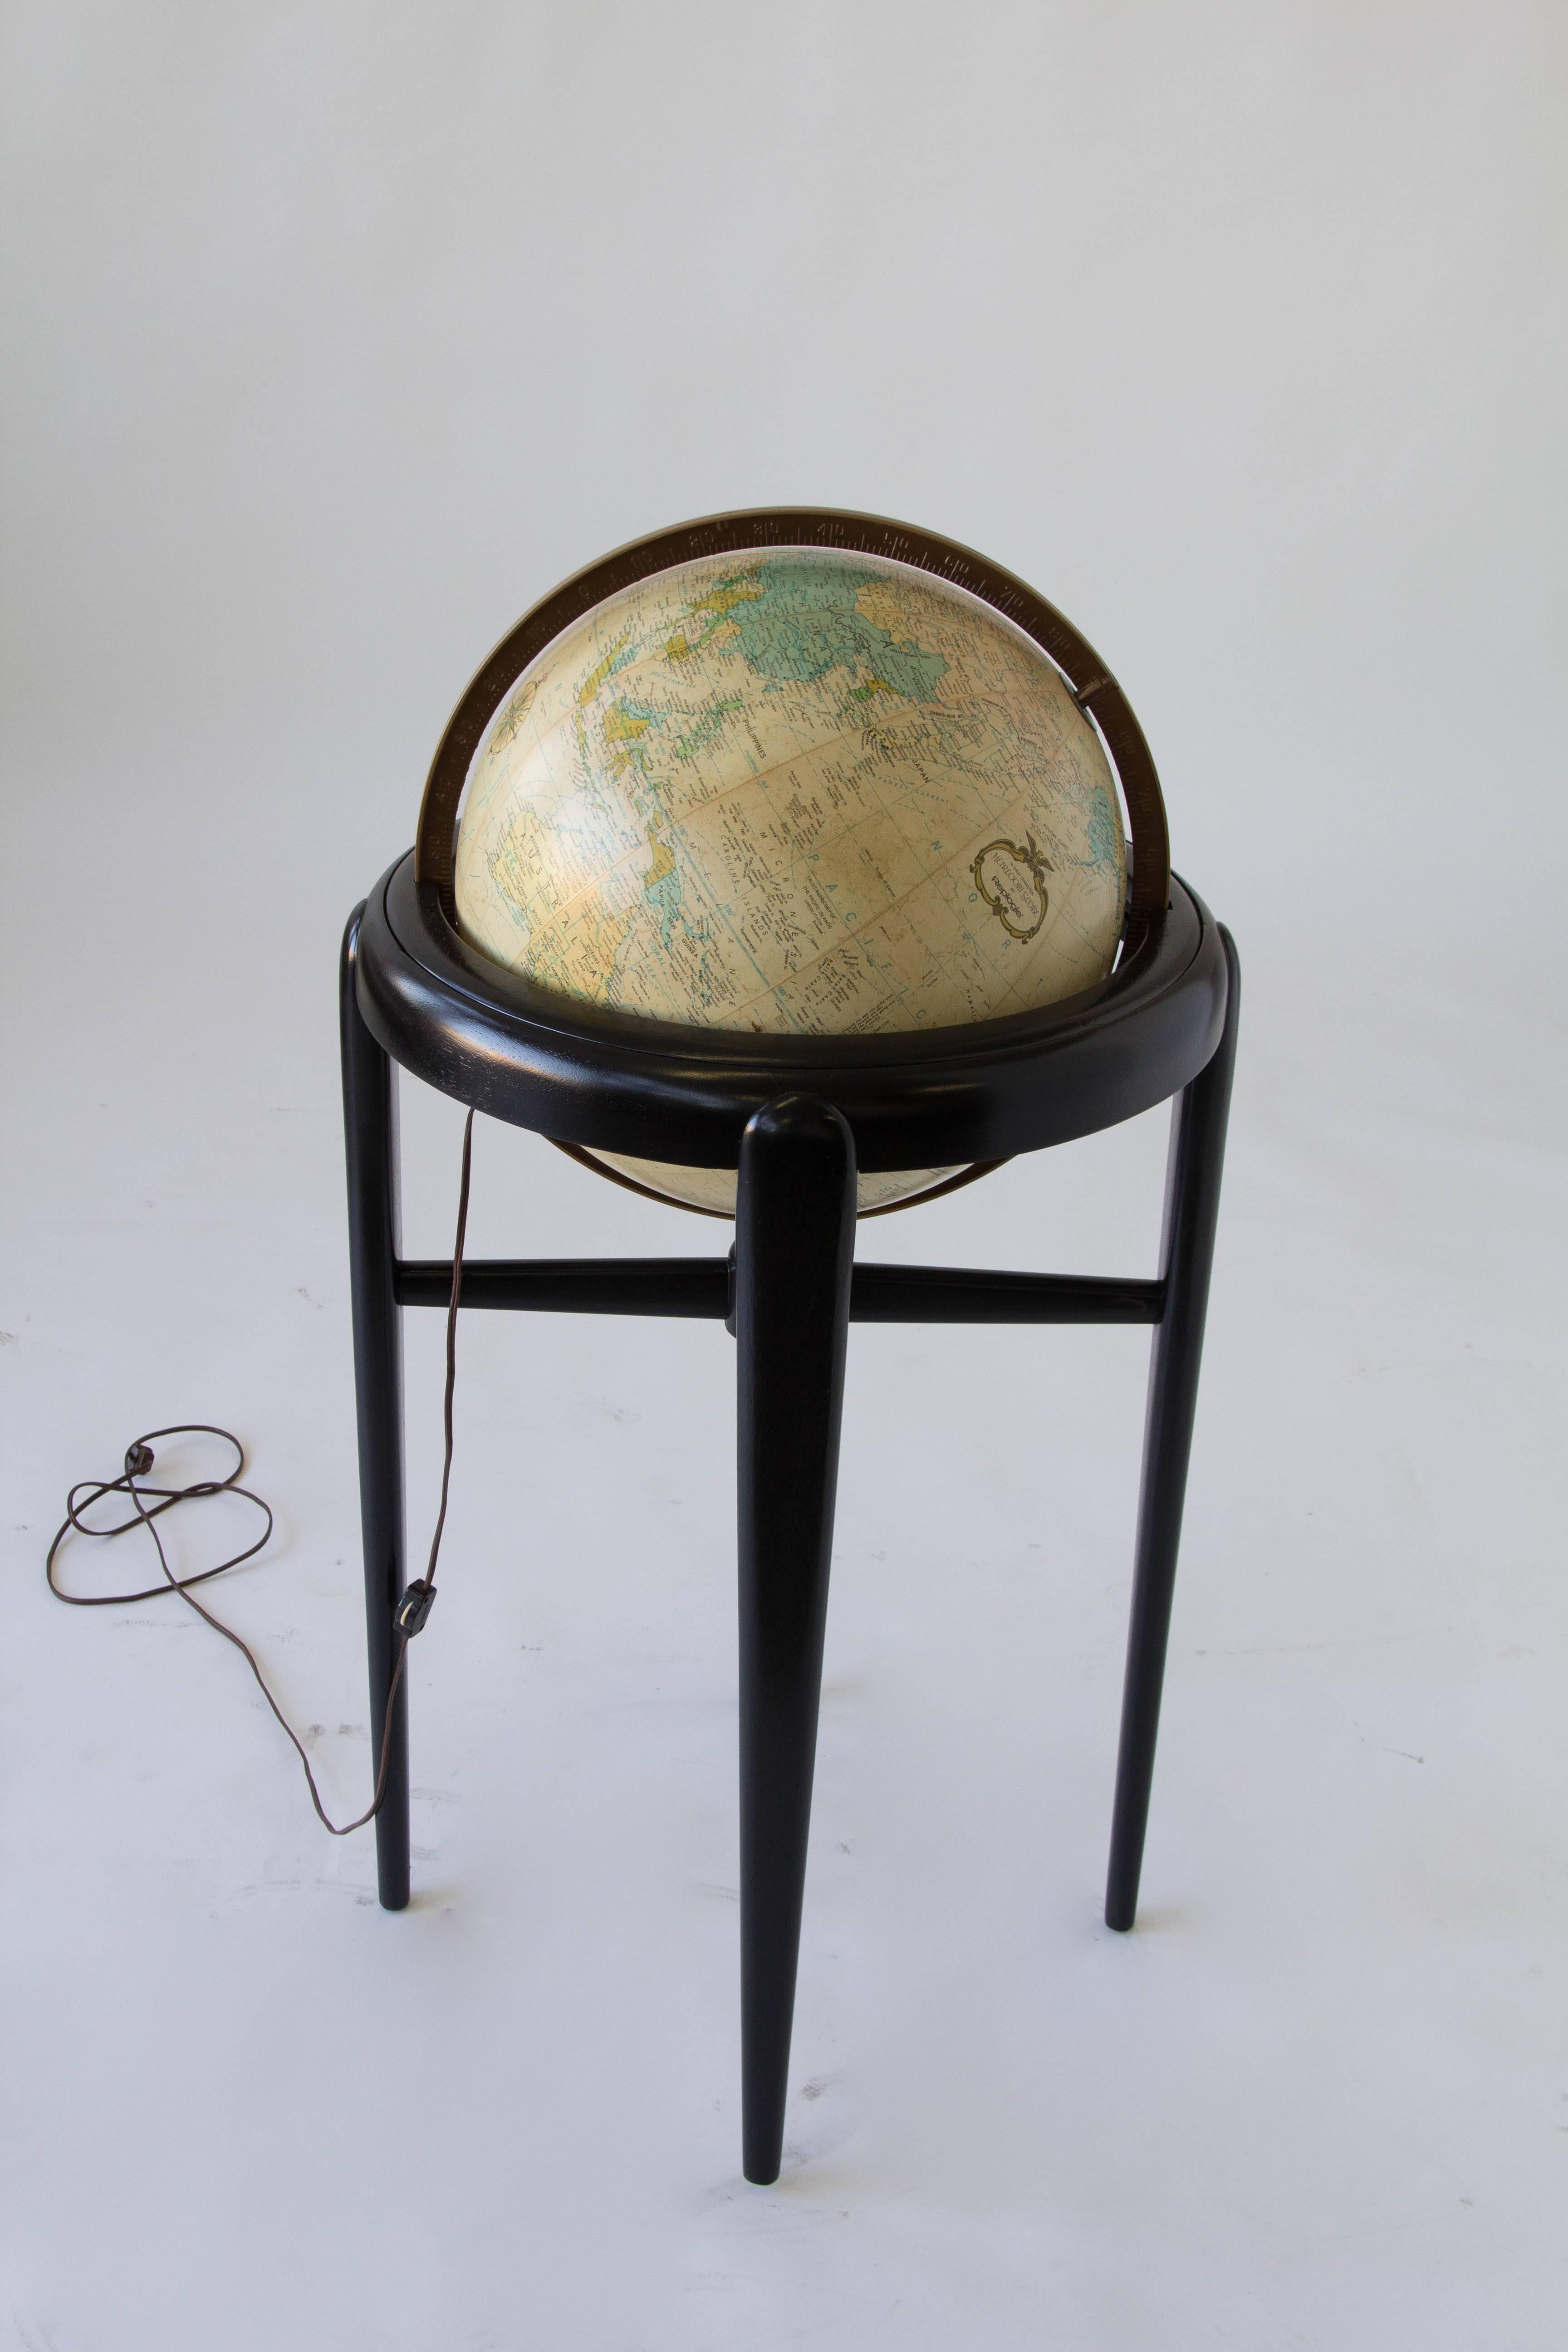 Ebonized Replogle Illuminating Globe in Wooden Stand